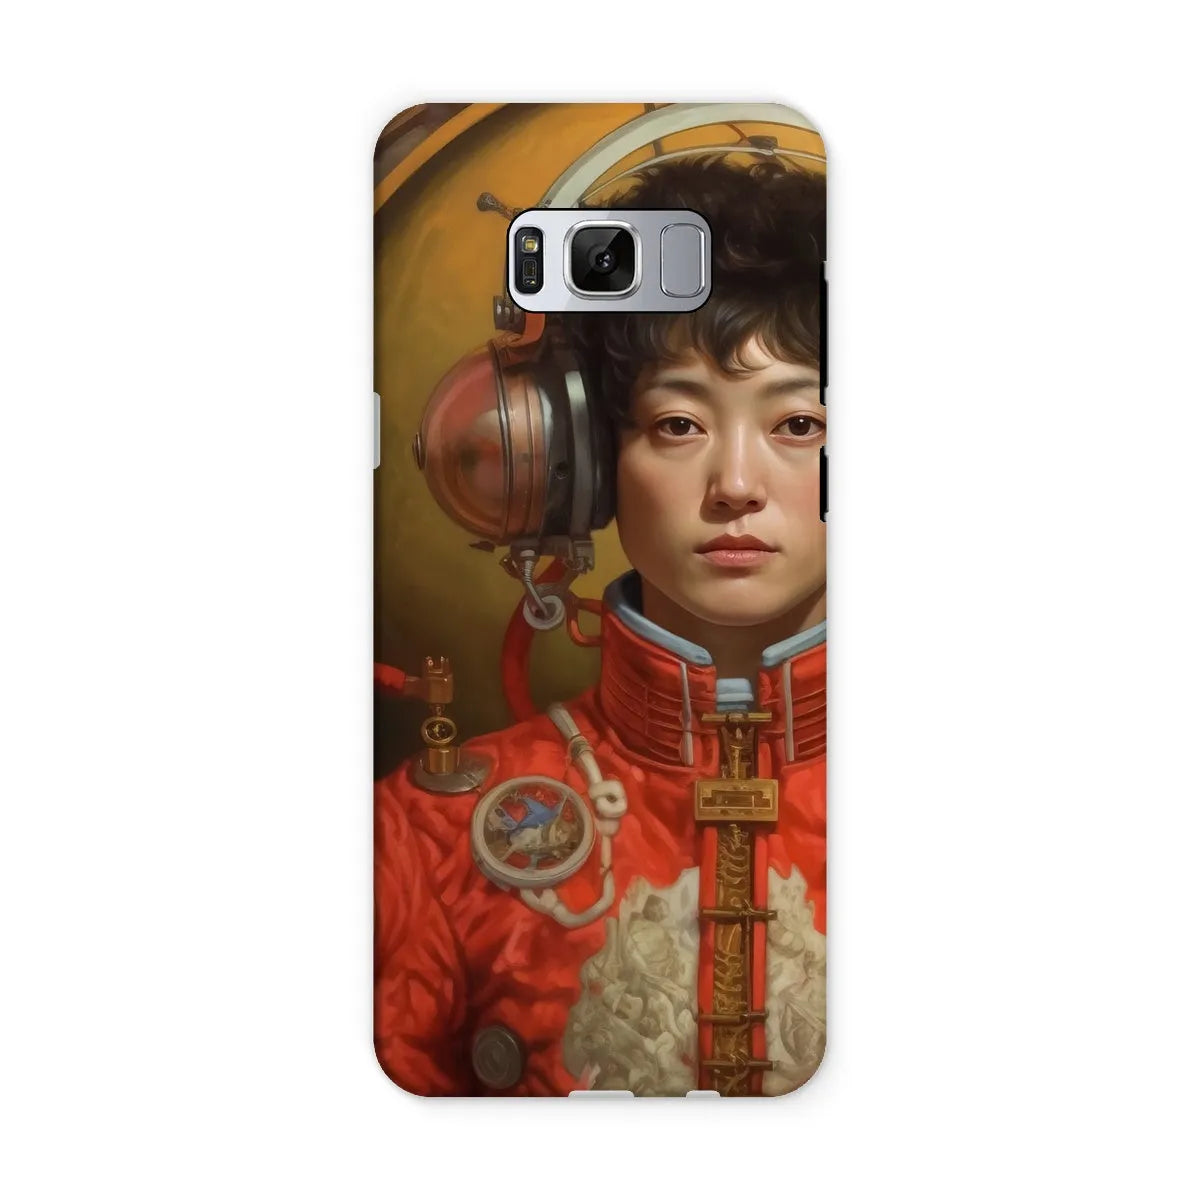 Mùchén The Gay Astronaut - Lgbtq Art Phone Case - Samsung Galaxy S8 / Matte - Mobile Phone Cases - Aesthetic Art